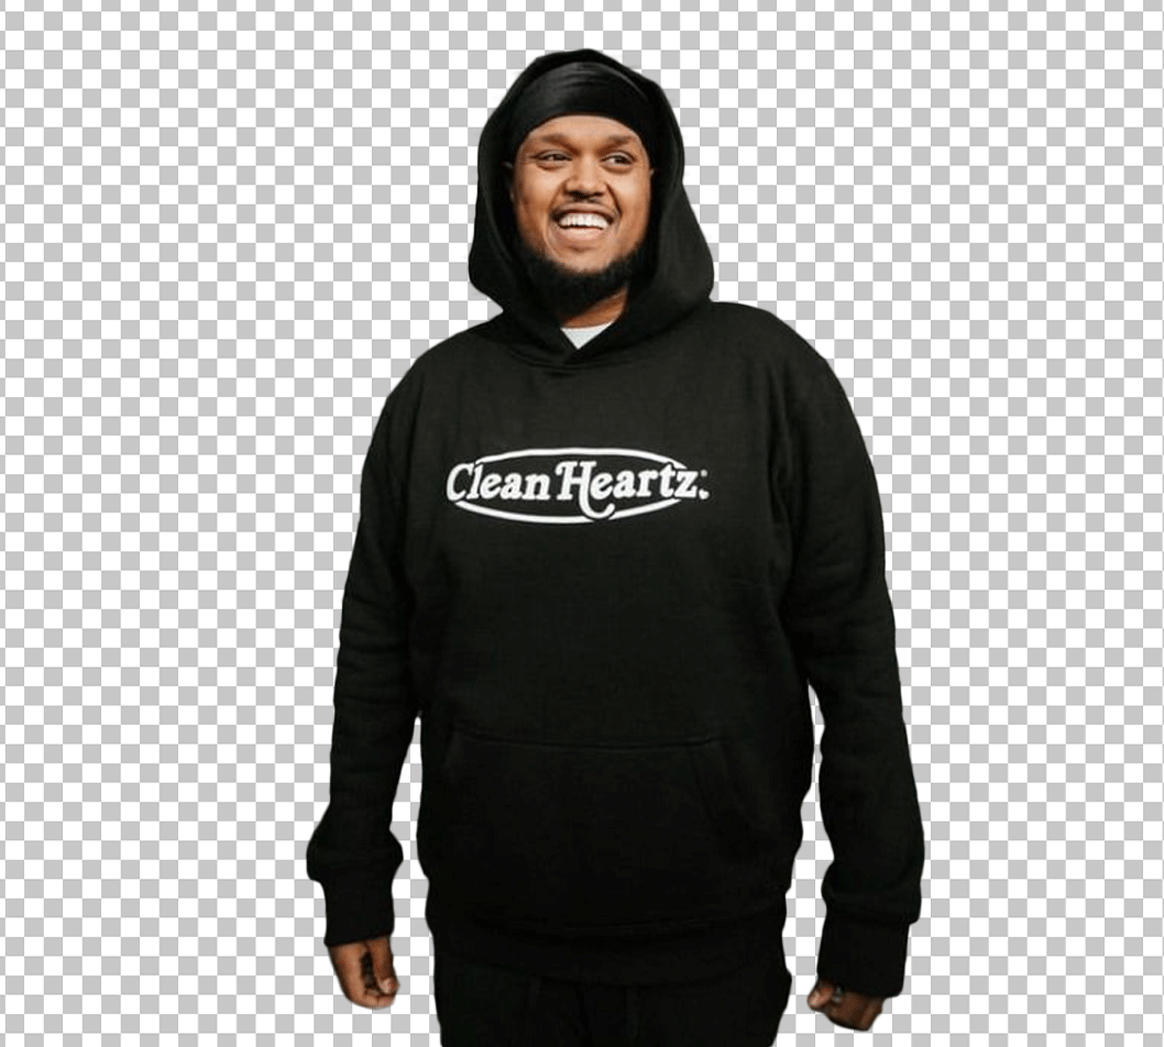 Chunkz wearing a black hoodie PNG Image